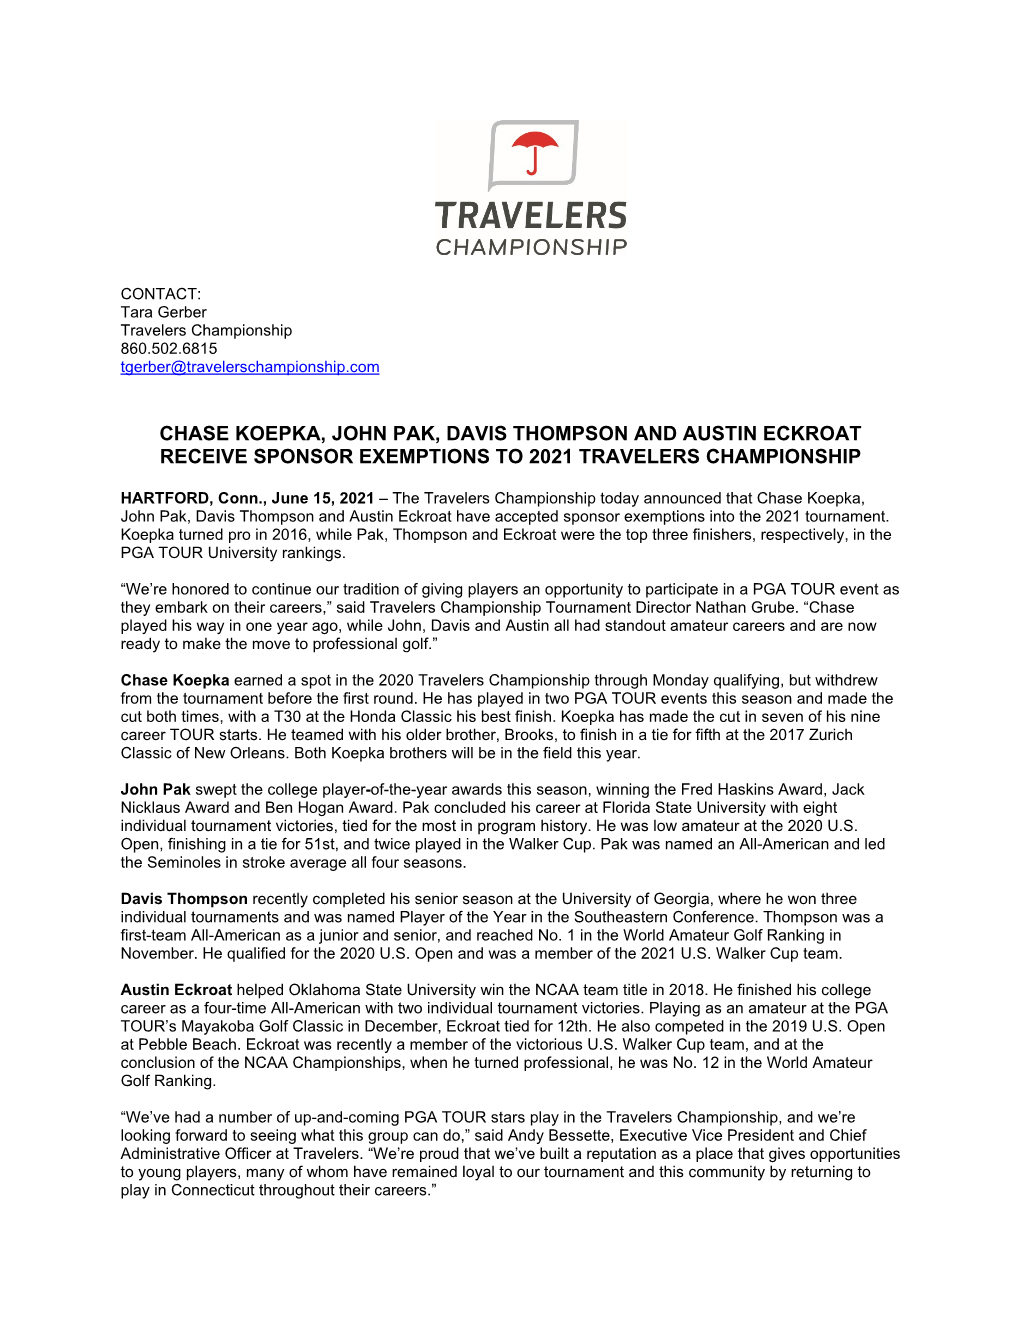 Chase Koepka, John Pak, Davis Thompson and Austin Eckroat Receive Sponsor Exemptions to 2021 Travelers Championship